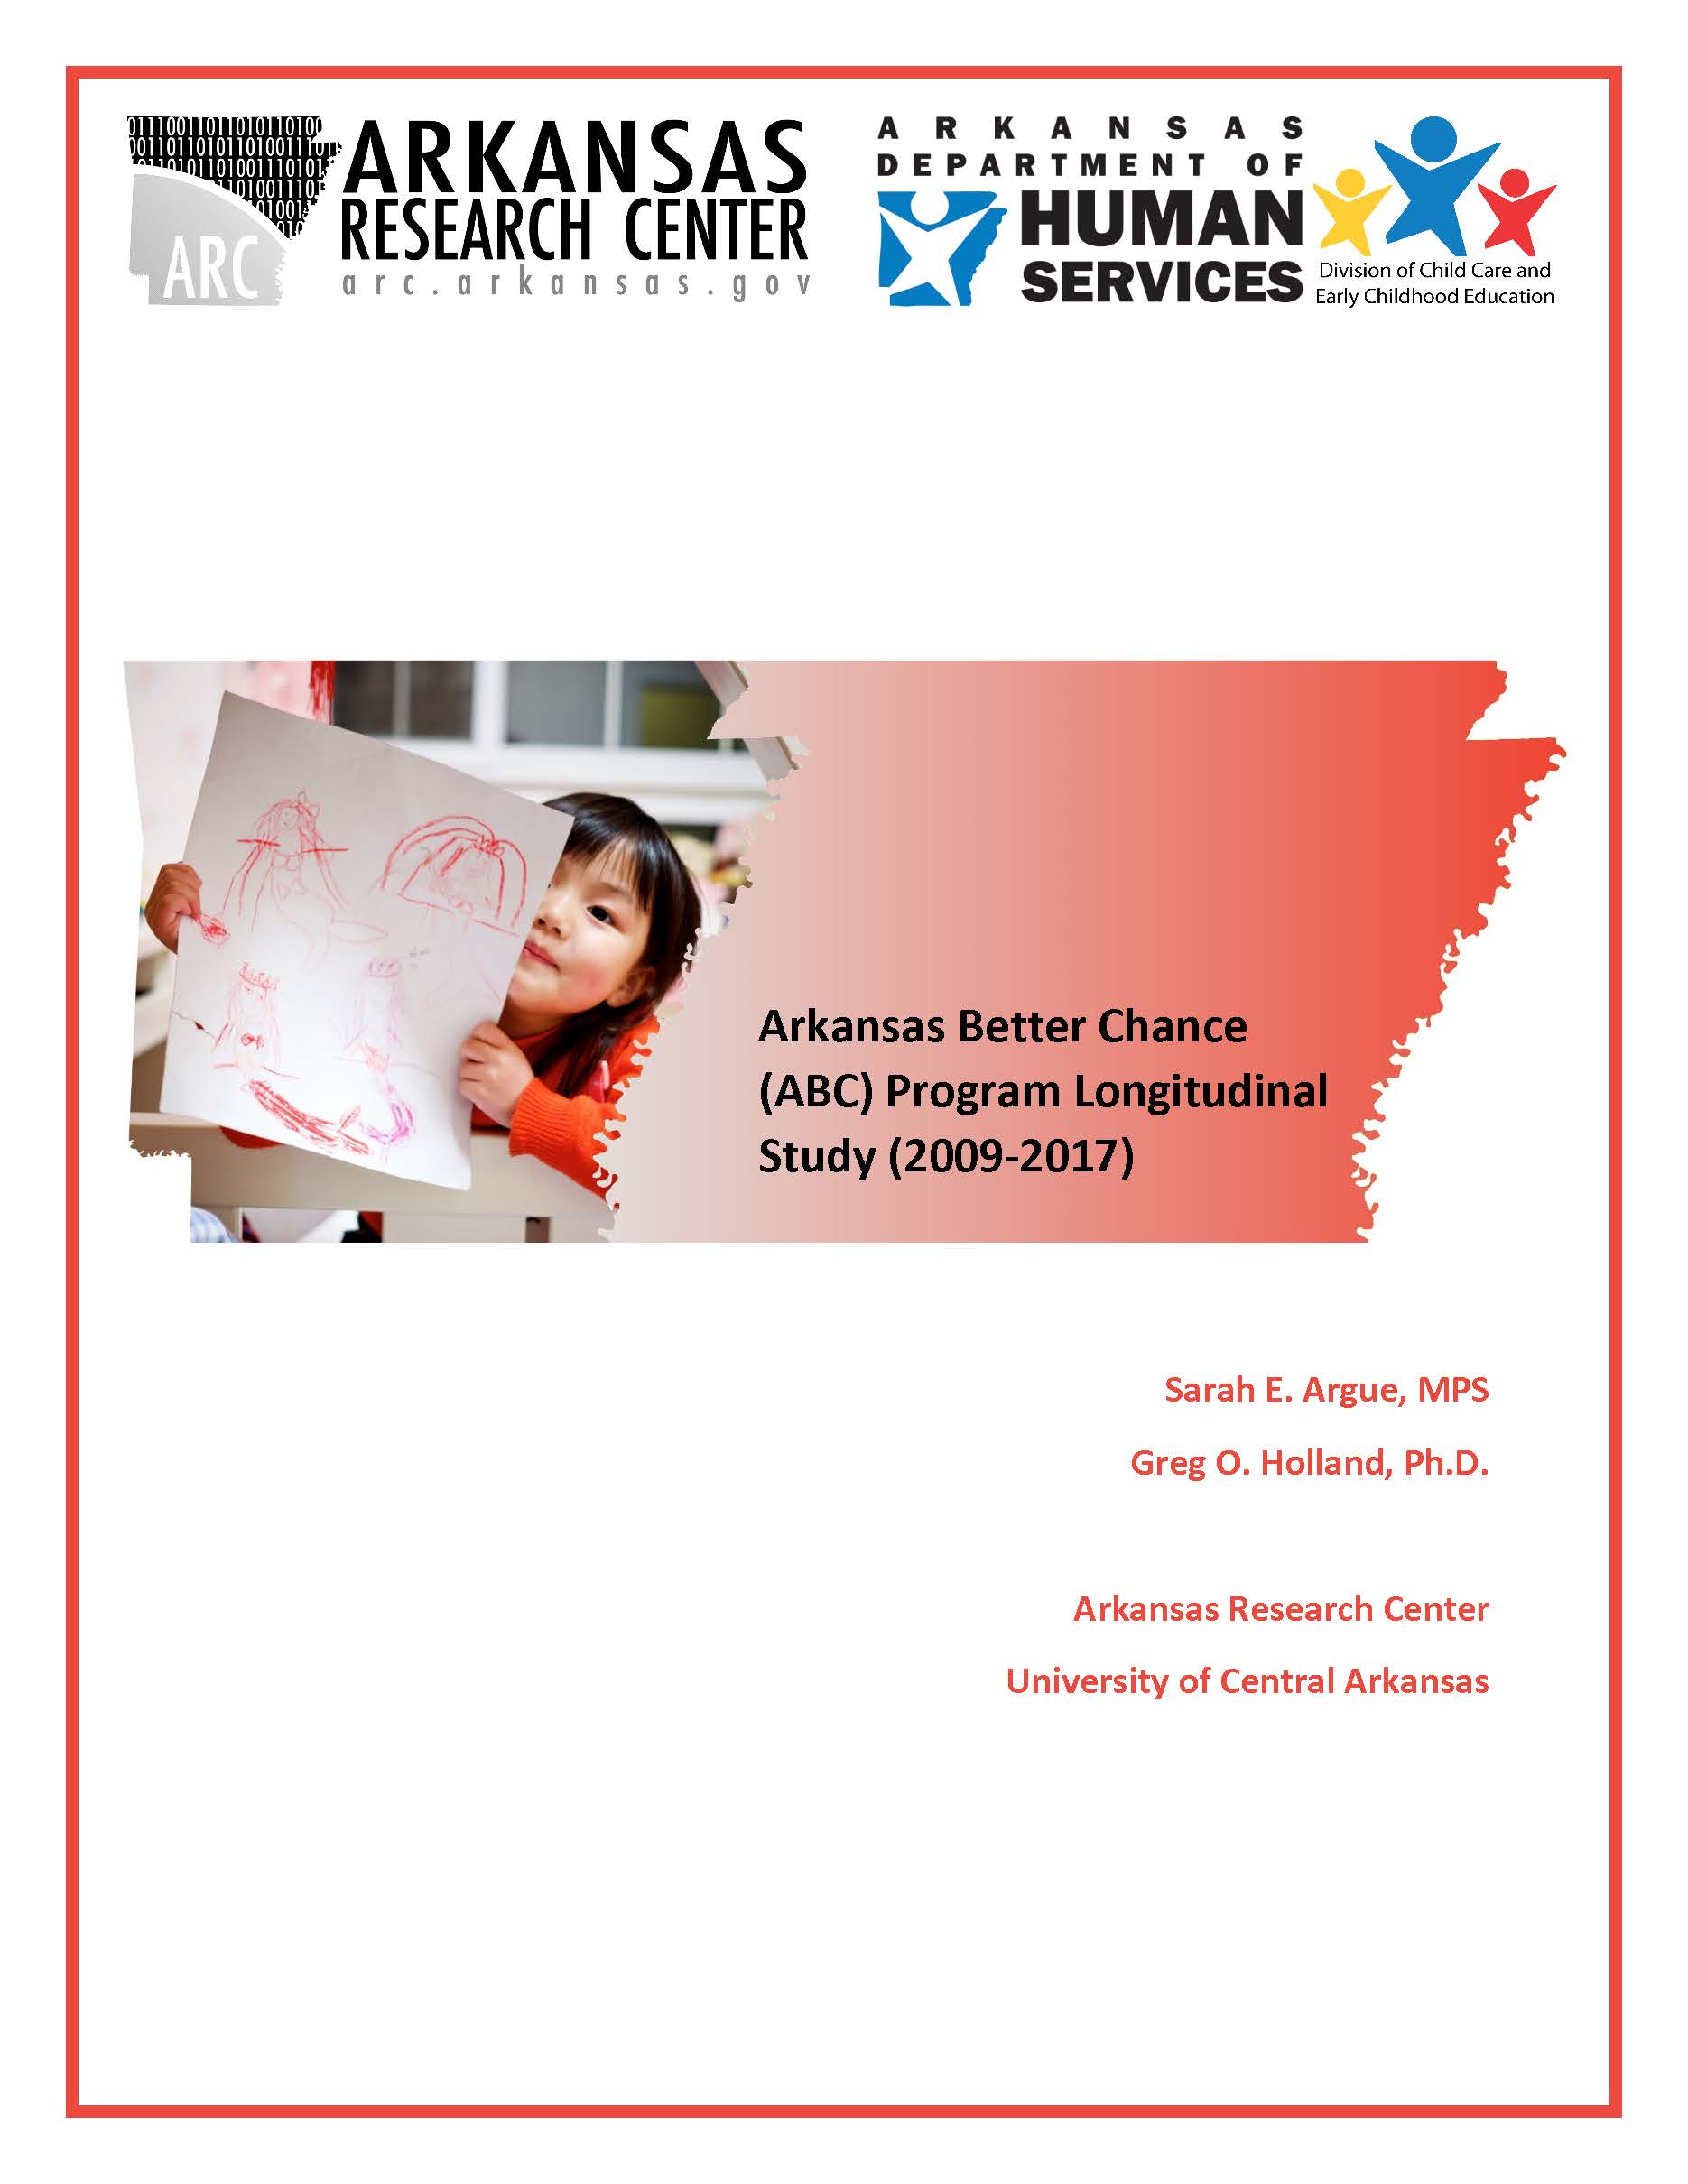 Arkansas Better Chance (ABC) Program Longitudinal Study (2009-2017)